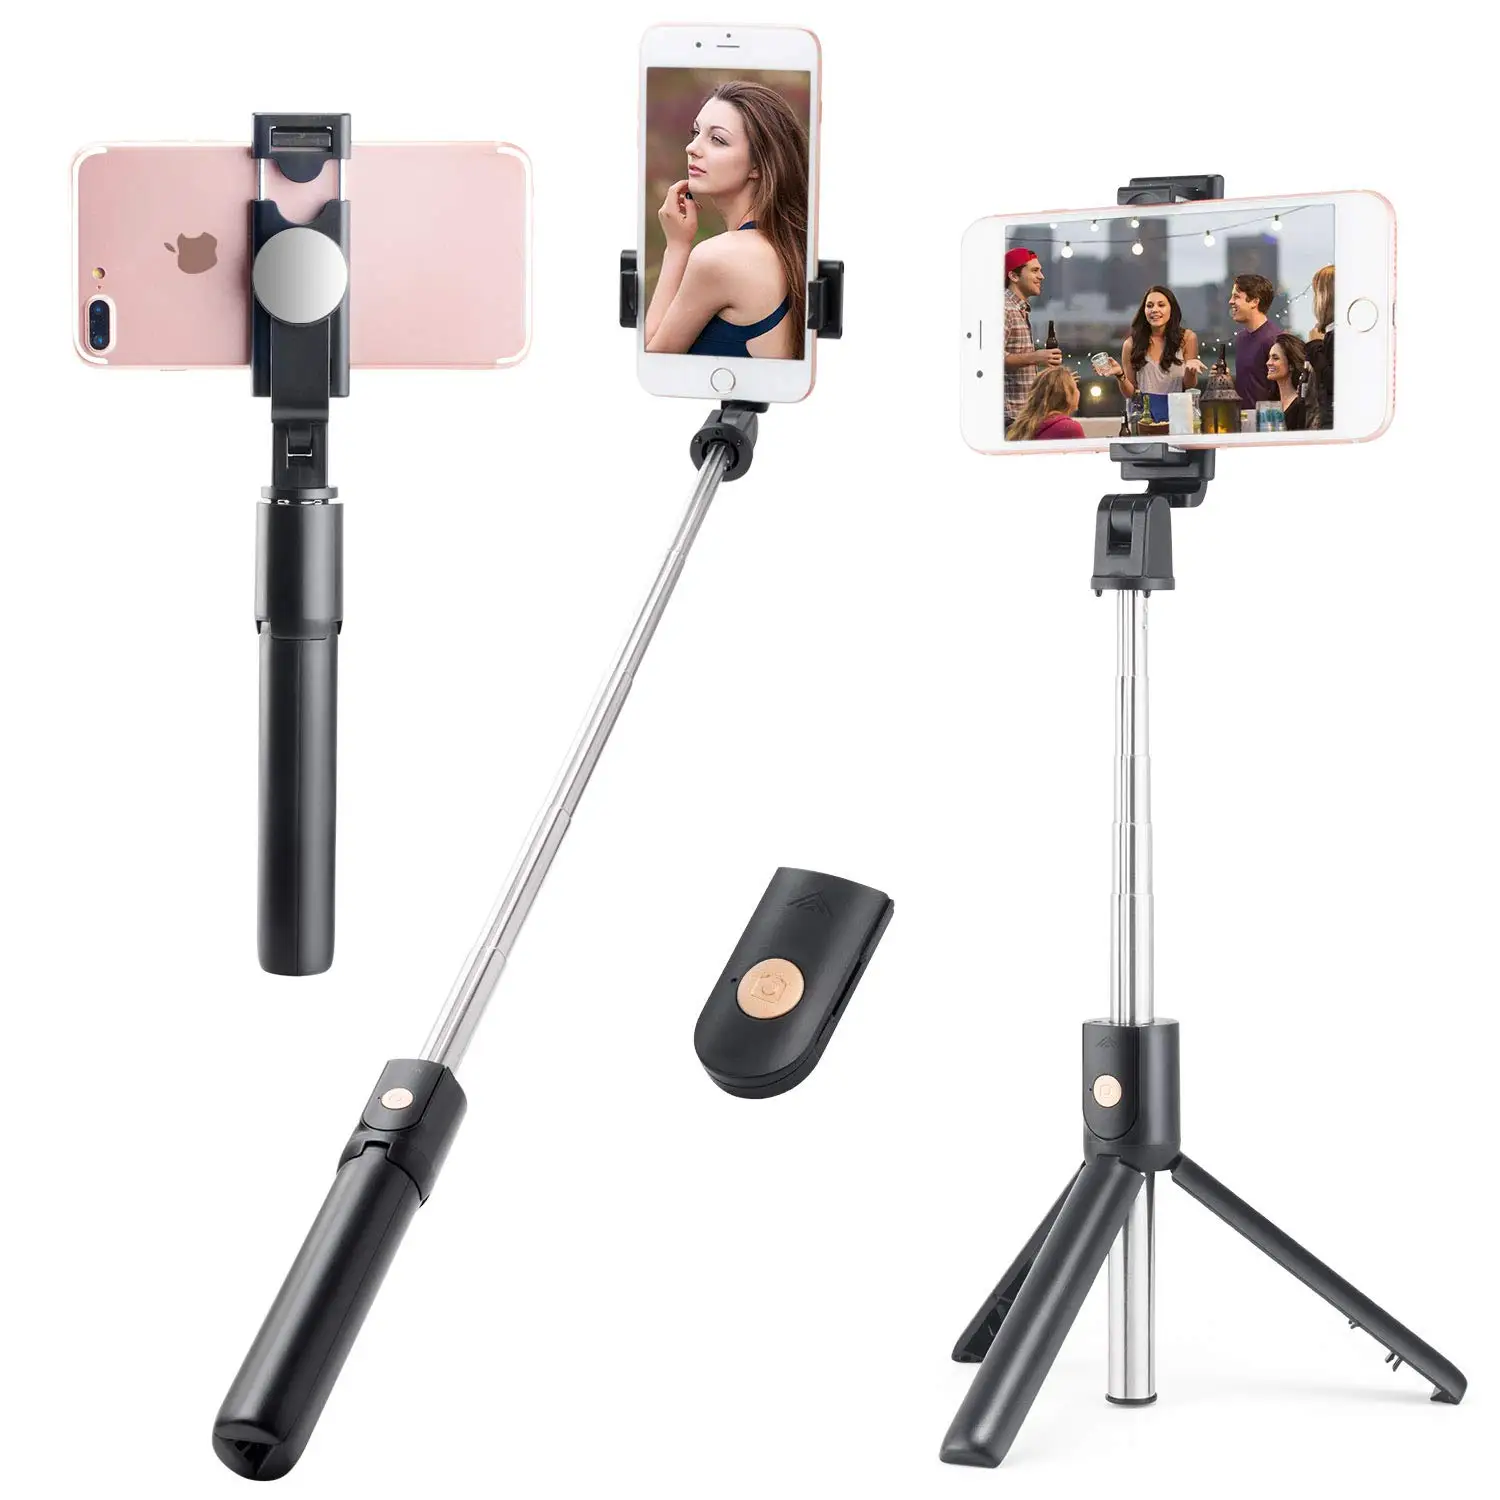 

Amazon Hot Sell K10 360 Degree Rotation Extendable Remote Shutter Hd Mirror Wireless Selfie Stick Tripod